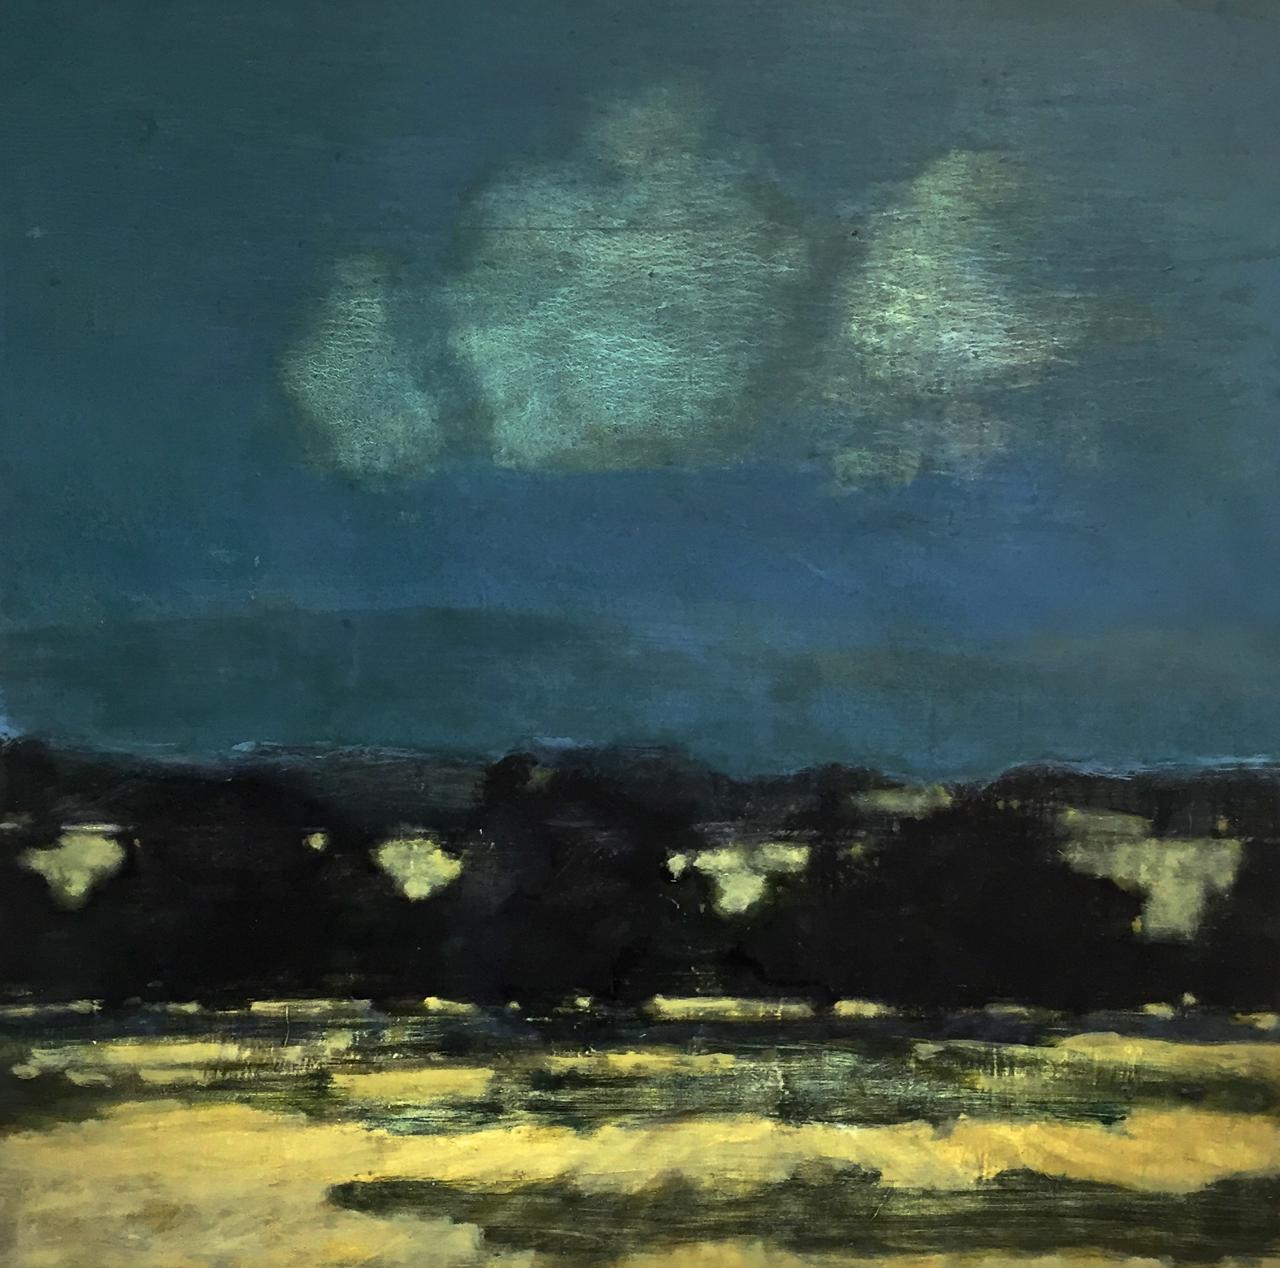 David Konigsberg Landscape Painting - Night Orchard, Teal Blue Sky Over Abstract Landscape Gold, Black, Cream 